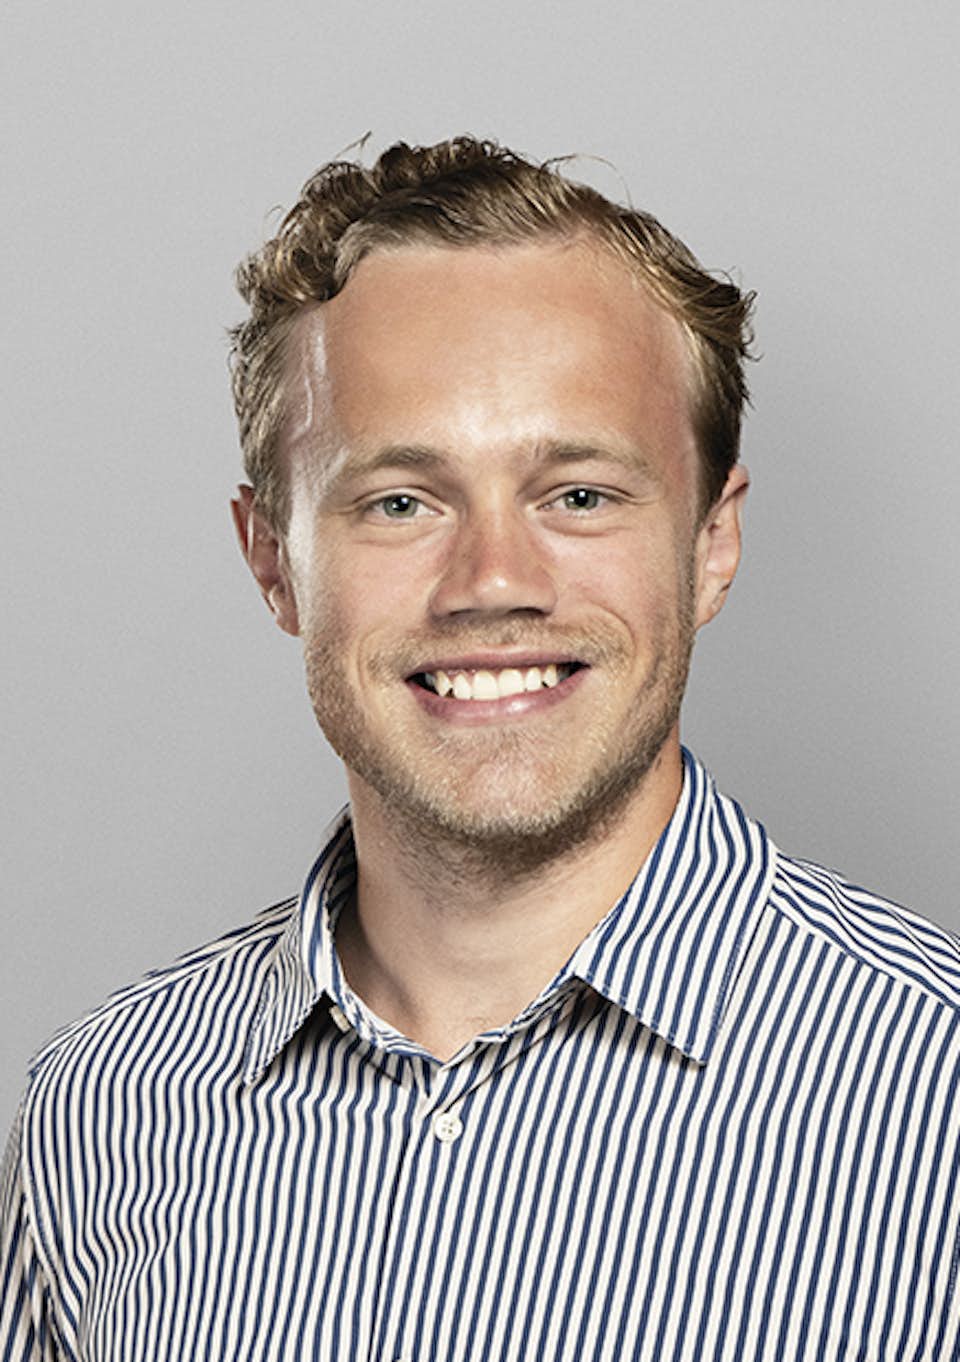 Mathias Uggerholt Sørensen MAUS